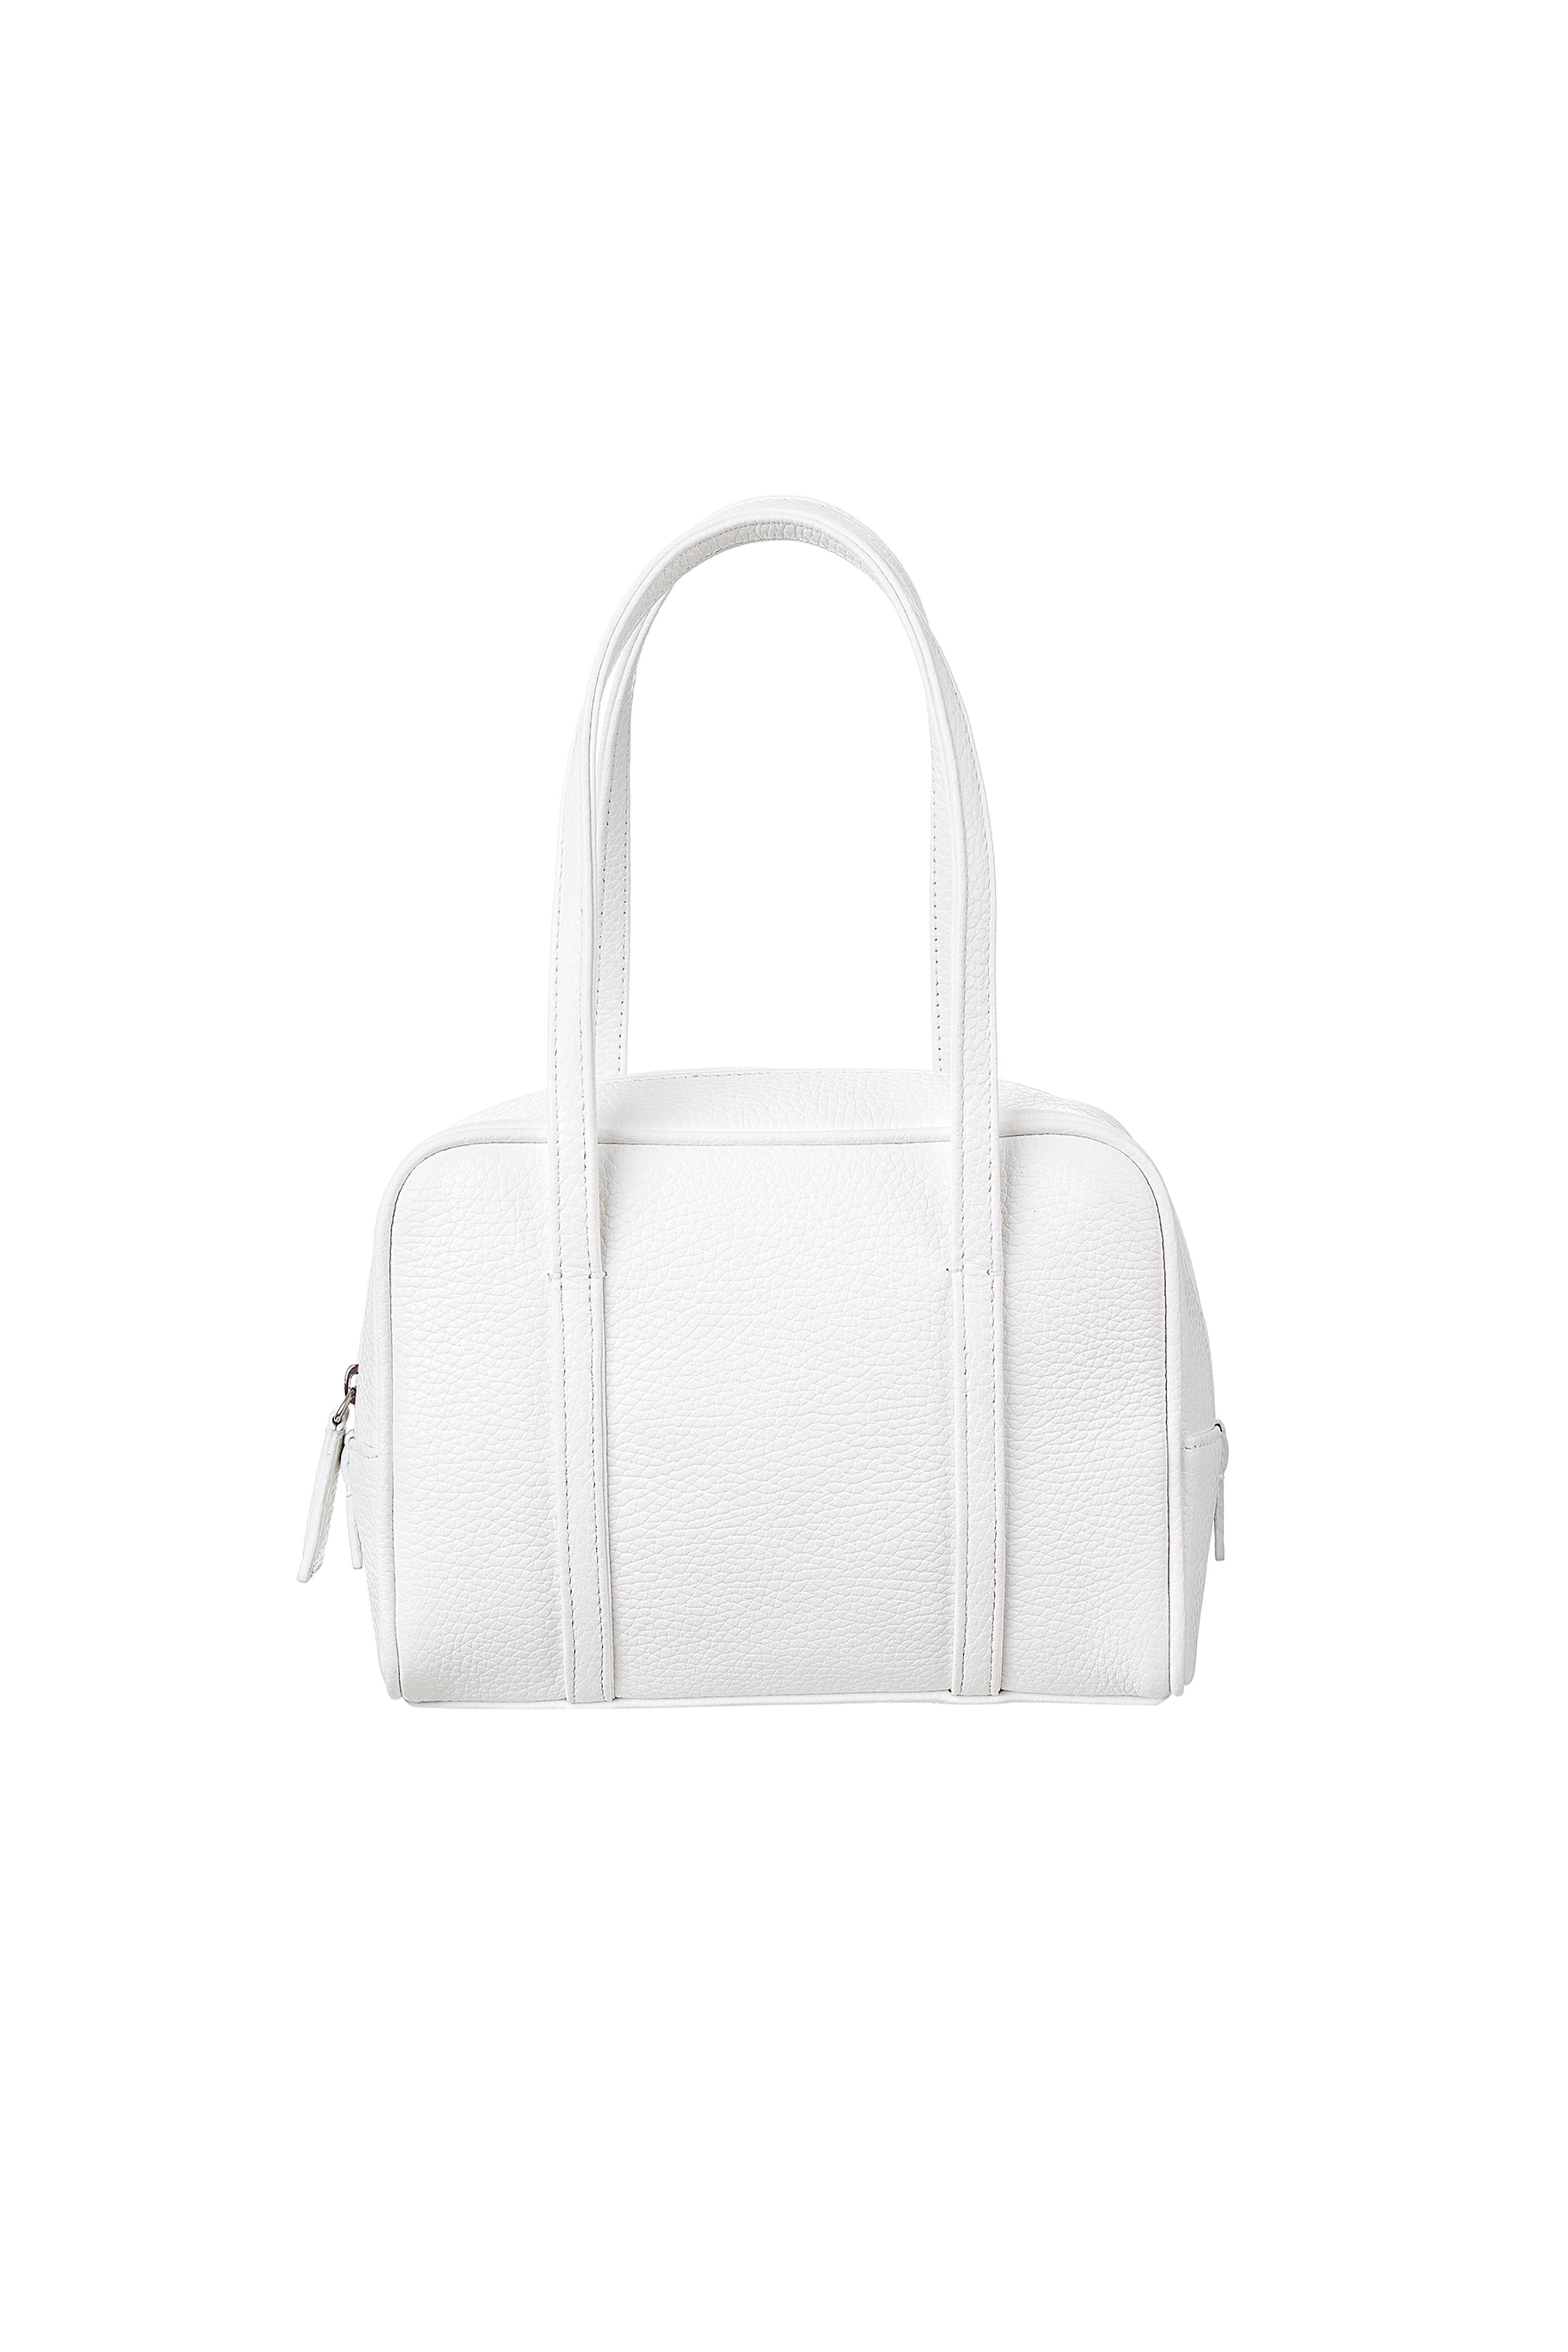 Boyy Bag Original Top Handle Mini White